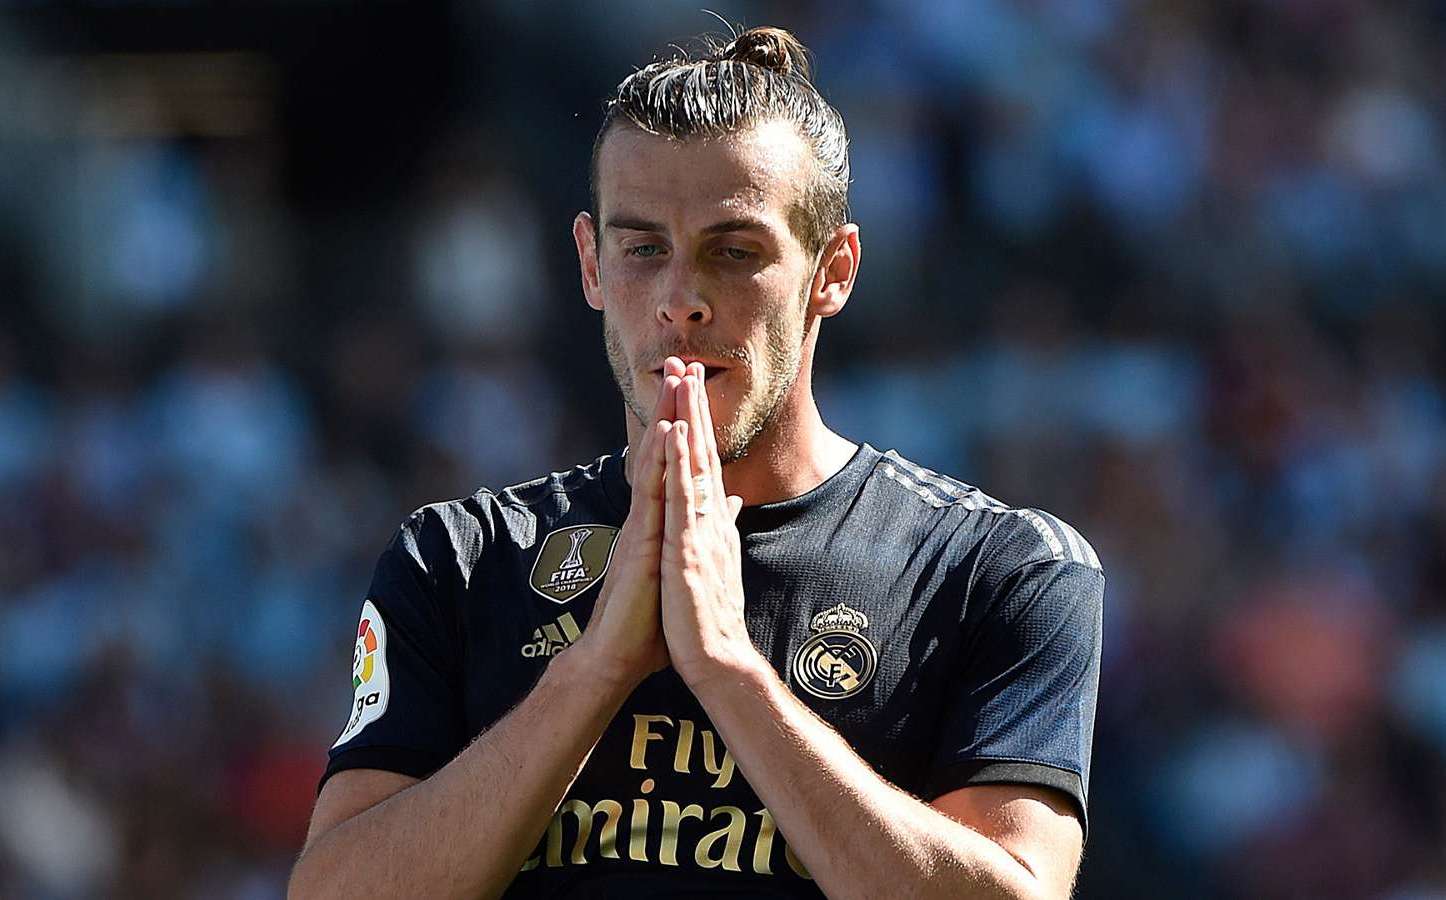 Sau tất cả, Bale vẫn quyết 